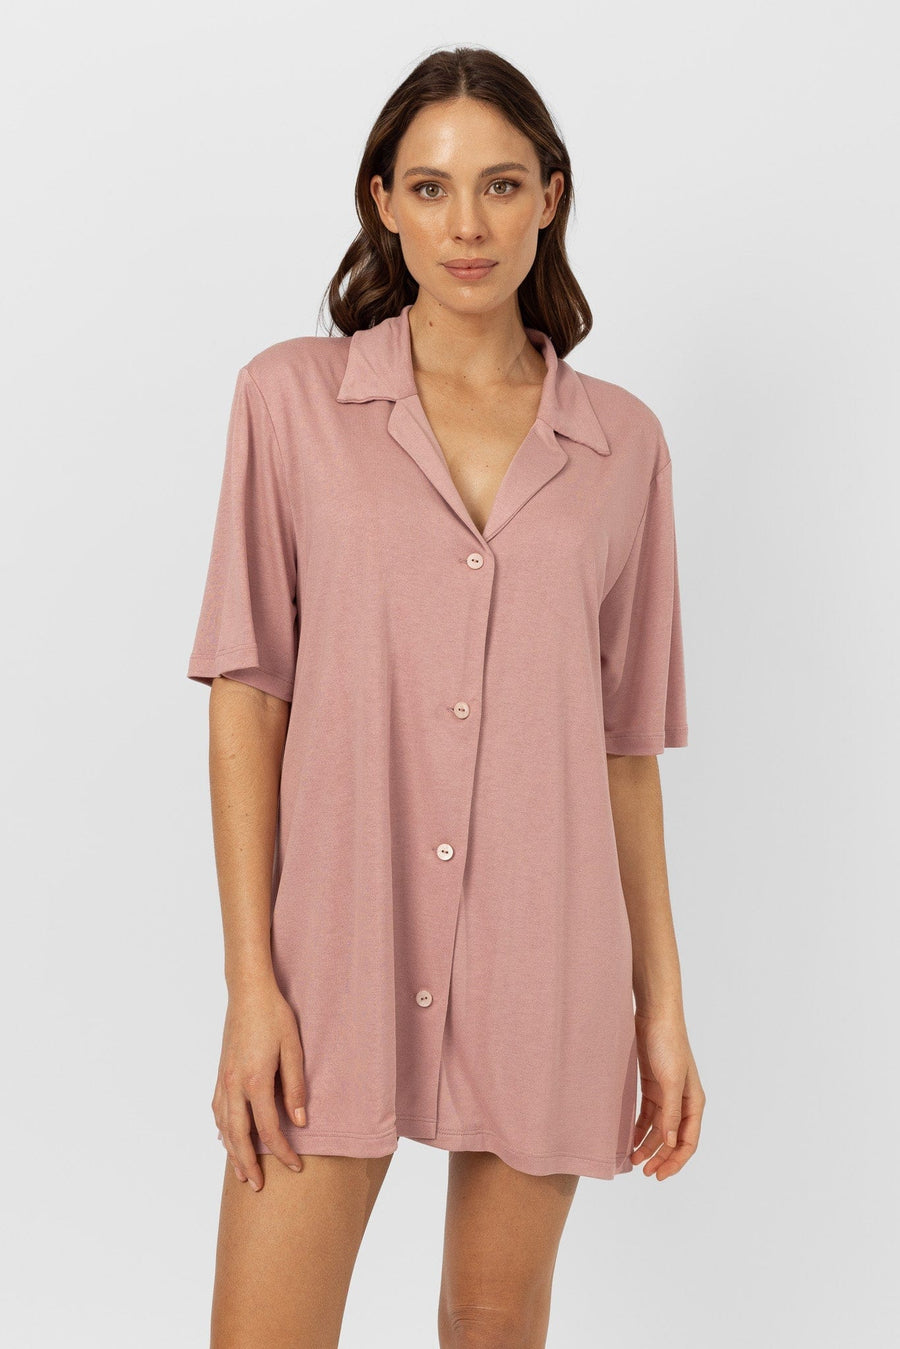 Lively Short Sleeve Dress | Blush Pink Nightgowns Australia Online | Reverie the Label  DRESSES Lively Short Sleeve Dress